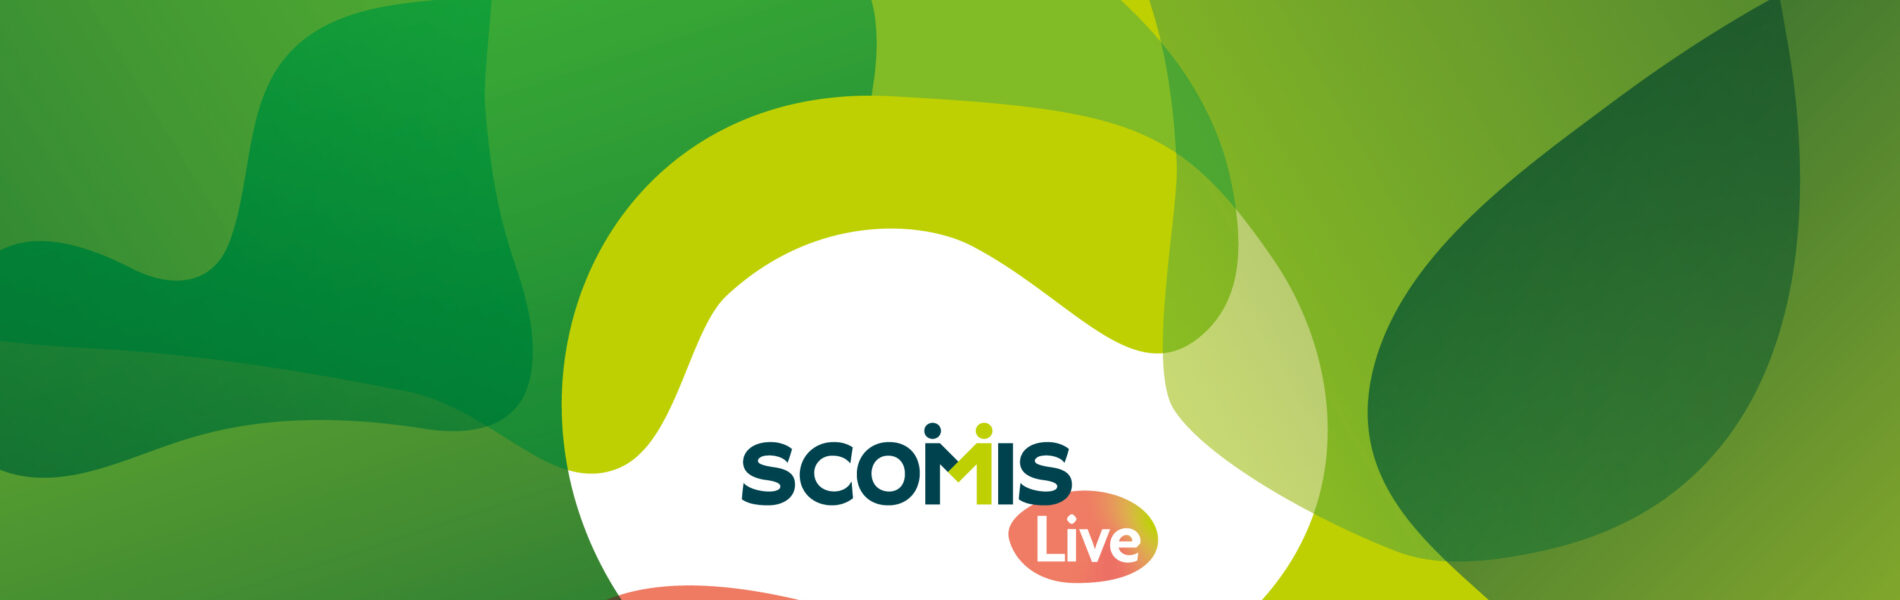 ScomisLive logo on swirling bright green backgroun